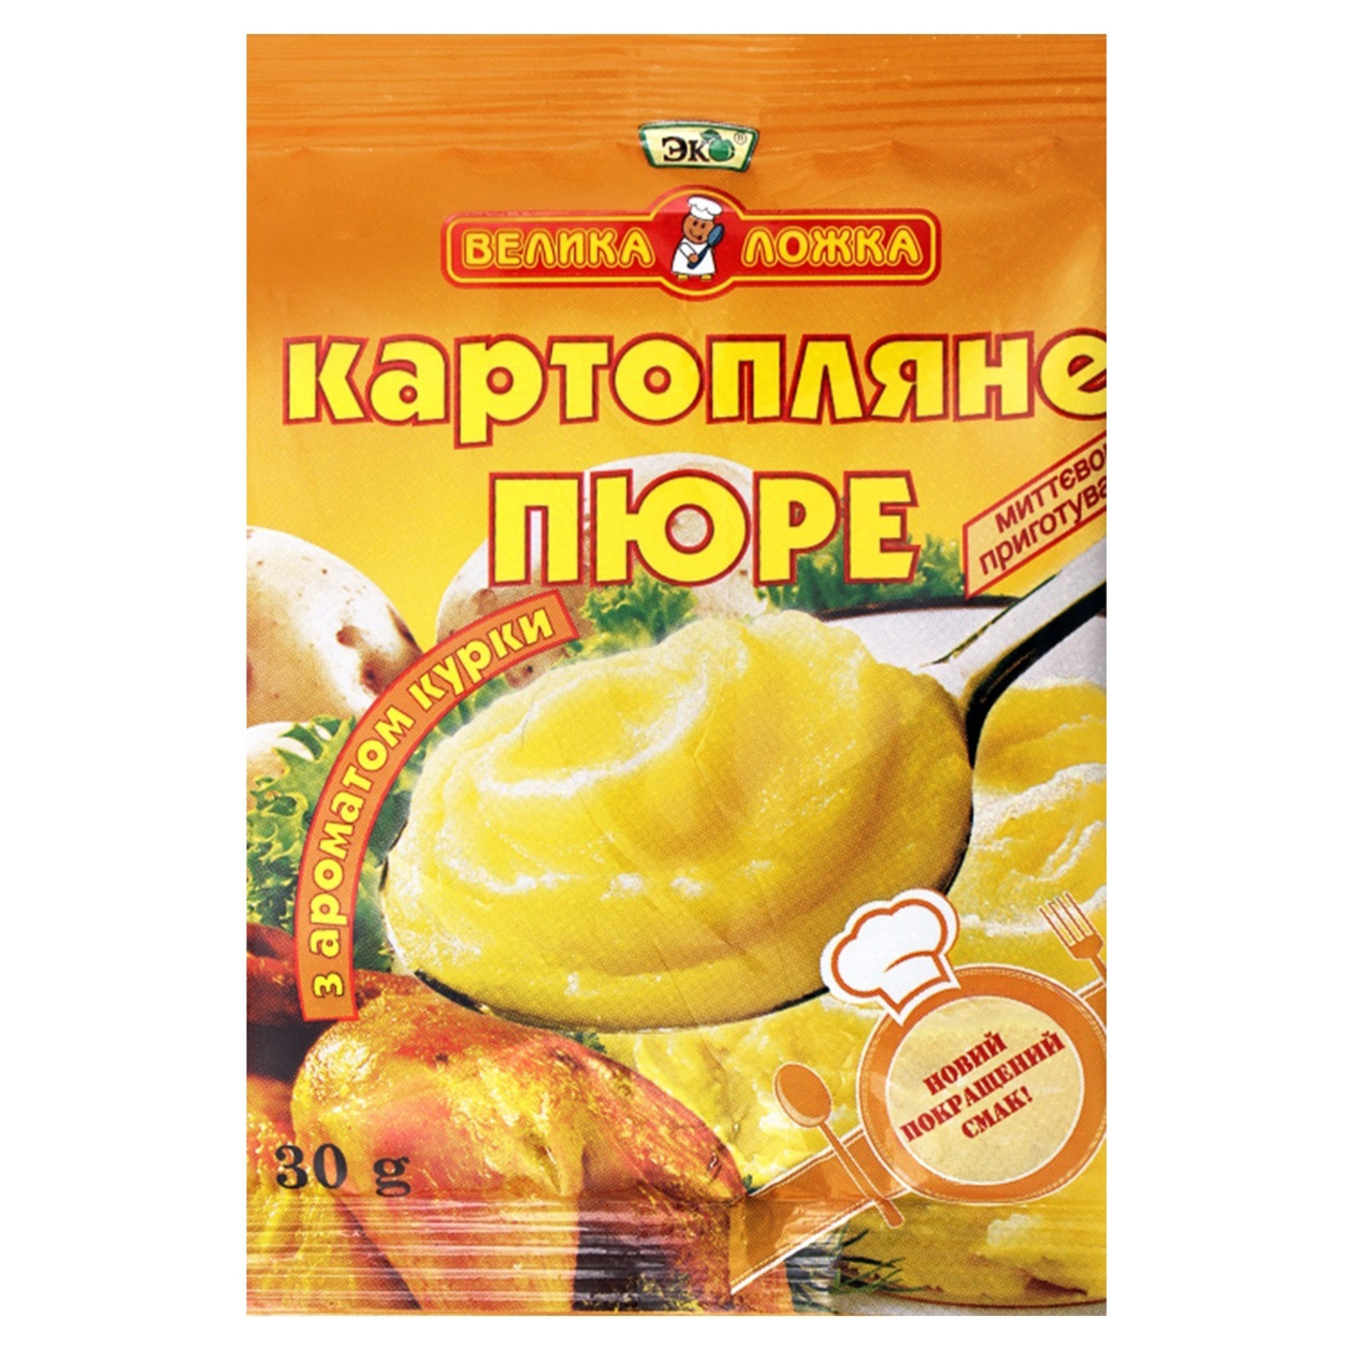 Eco potato puree with chicken 30g